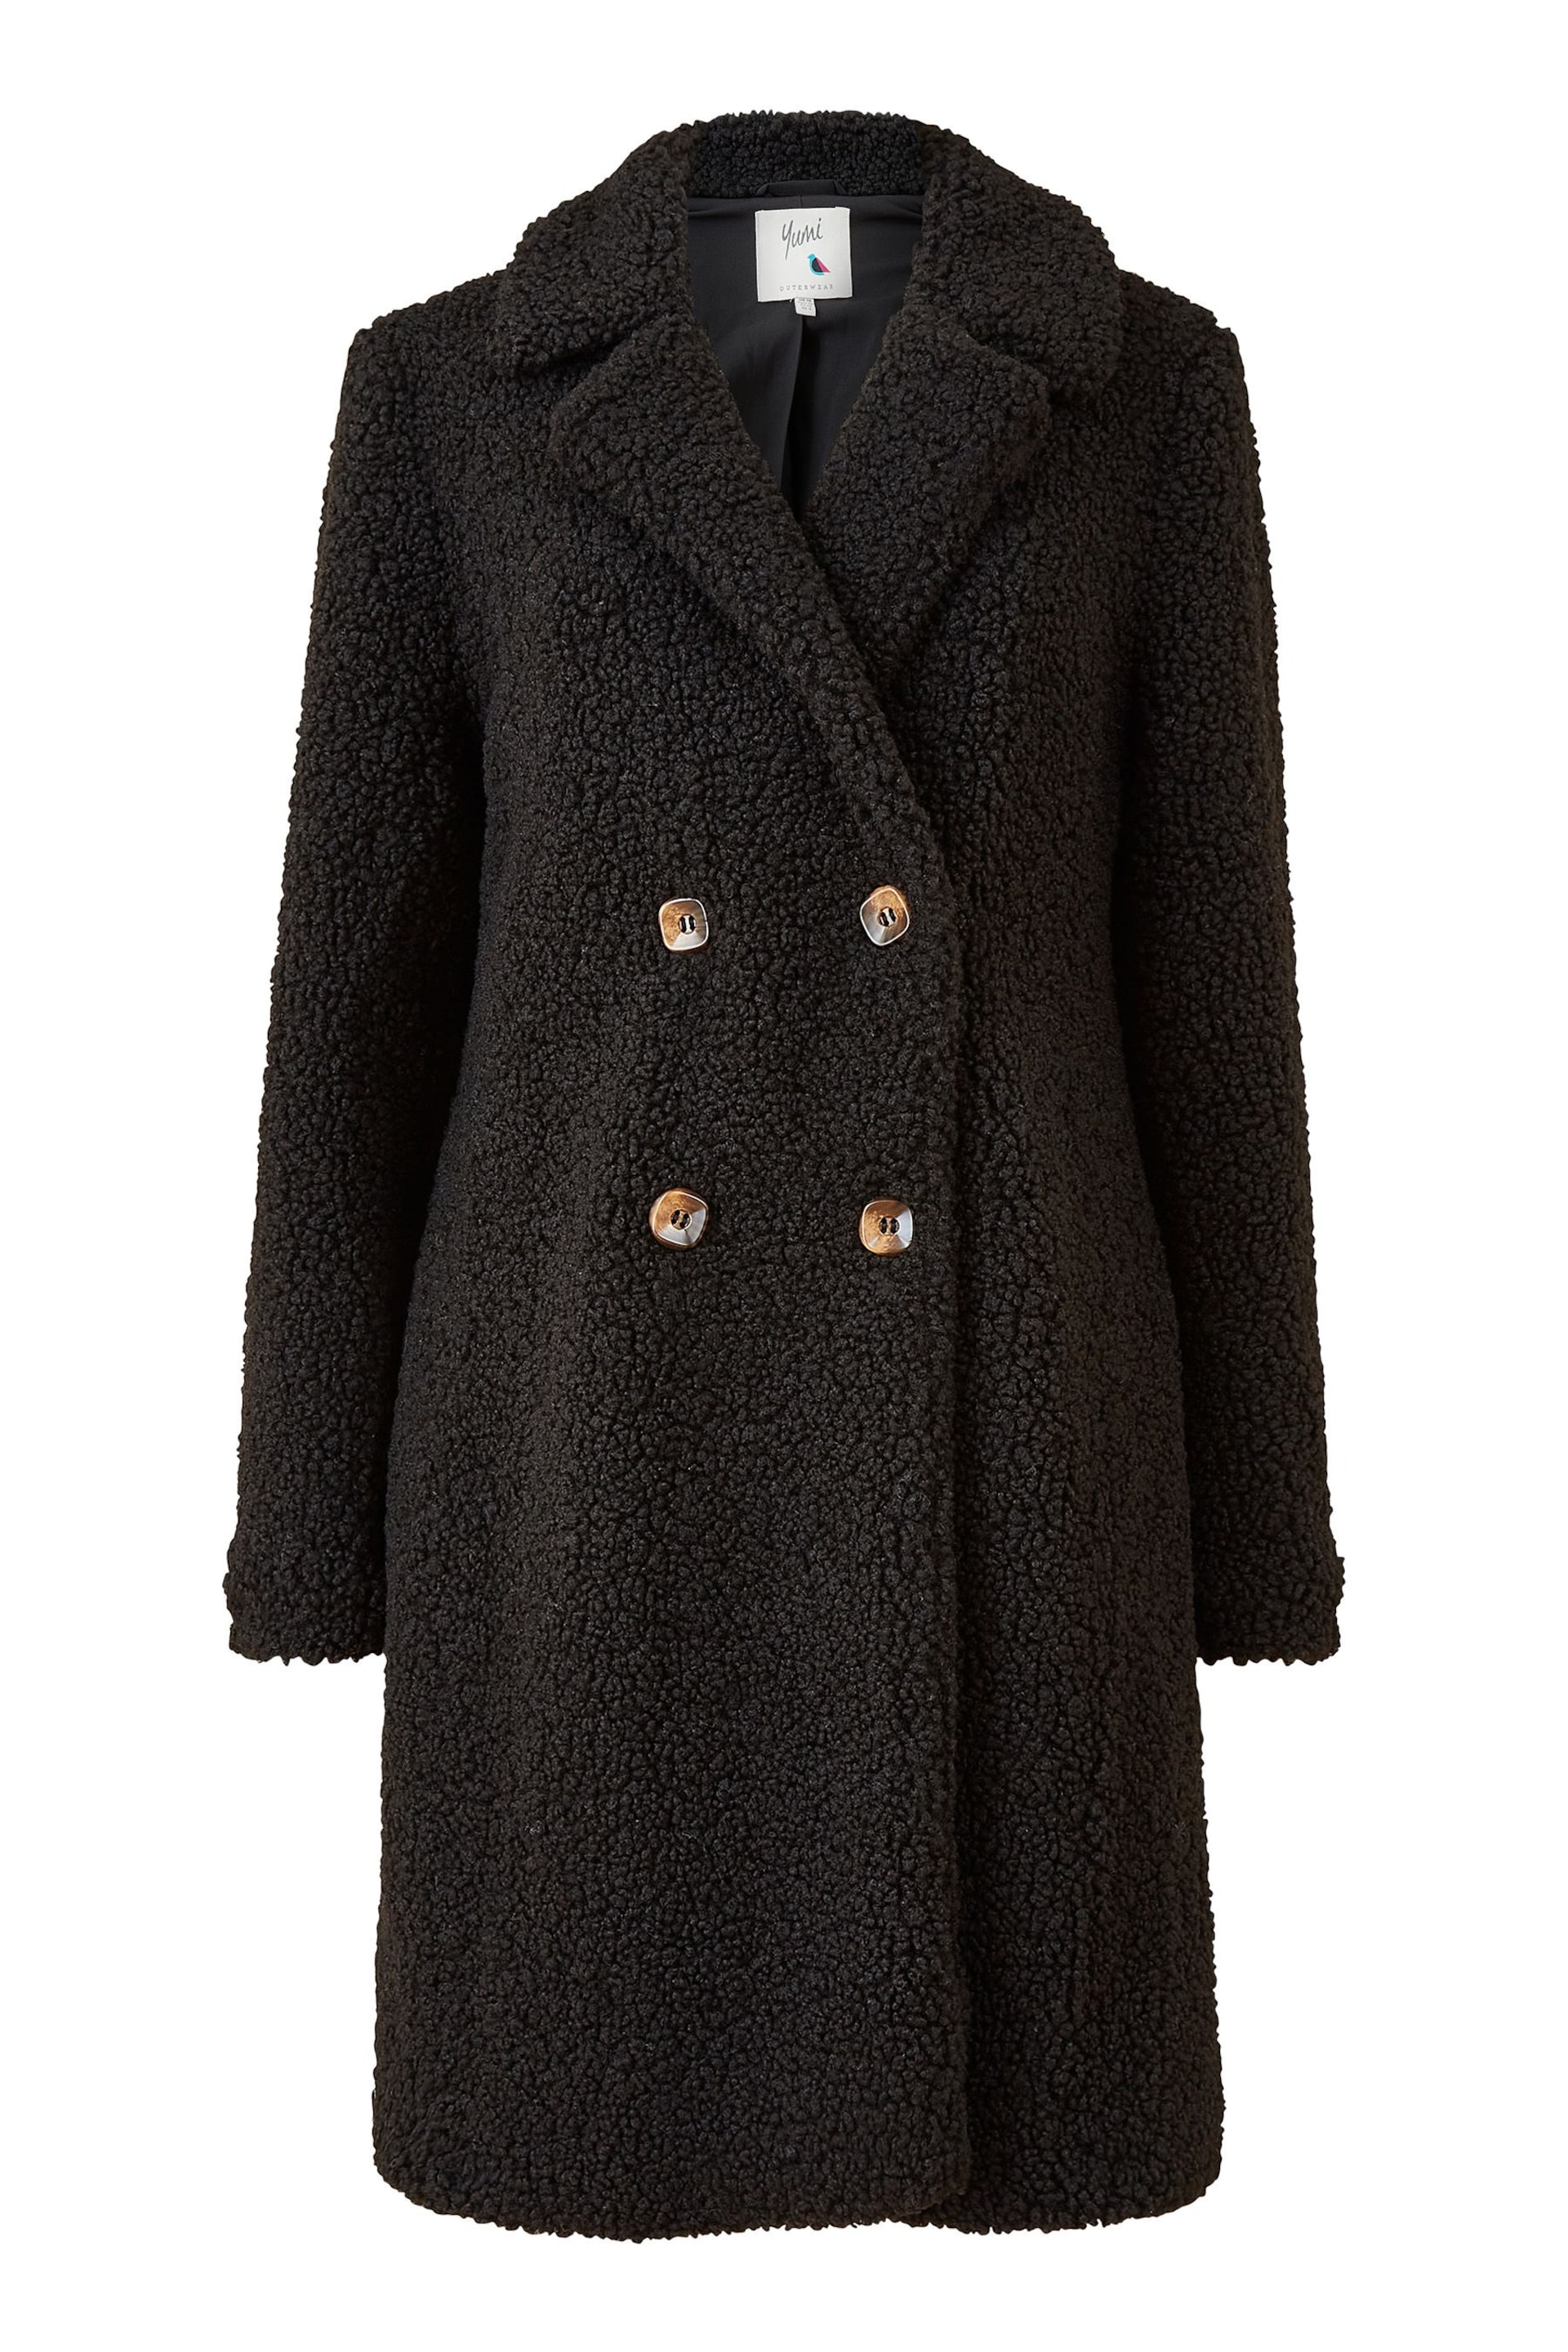 Yumi Black Teddy Bear Coat - Image 5 of 5